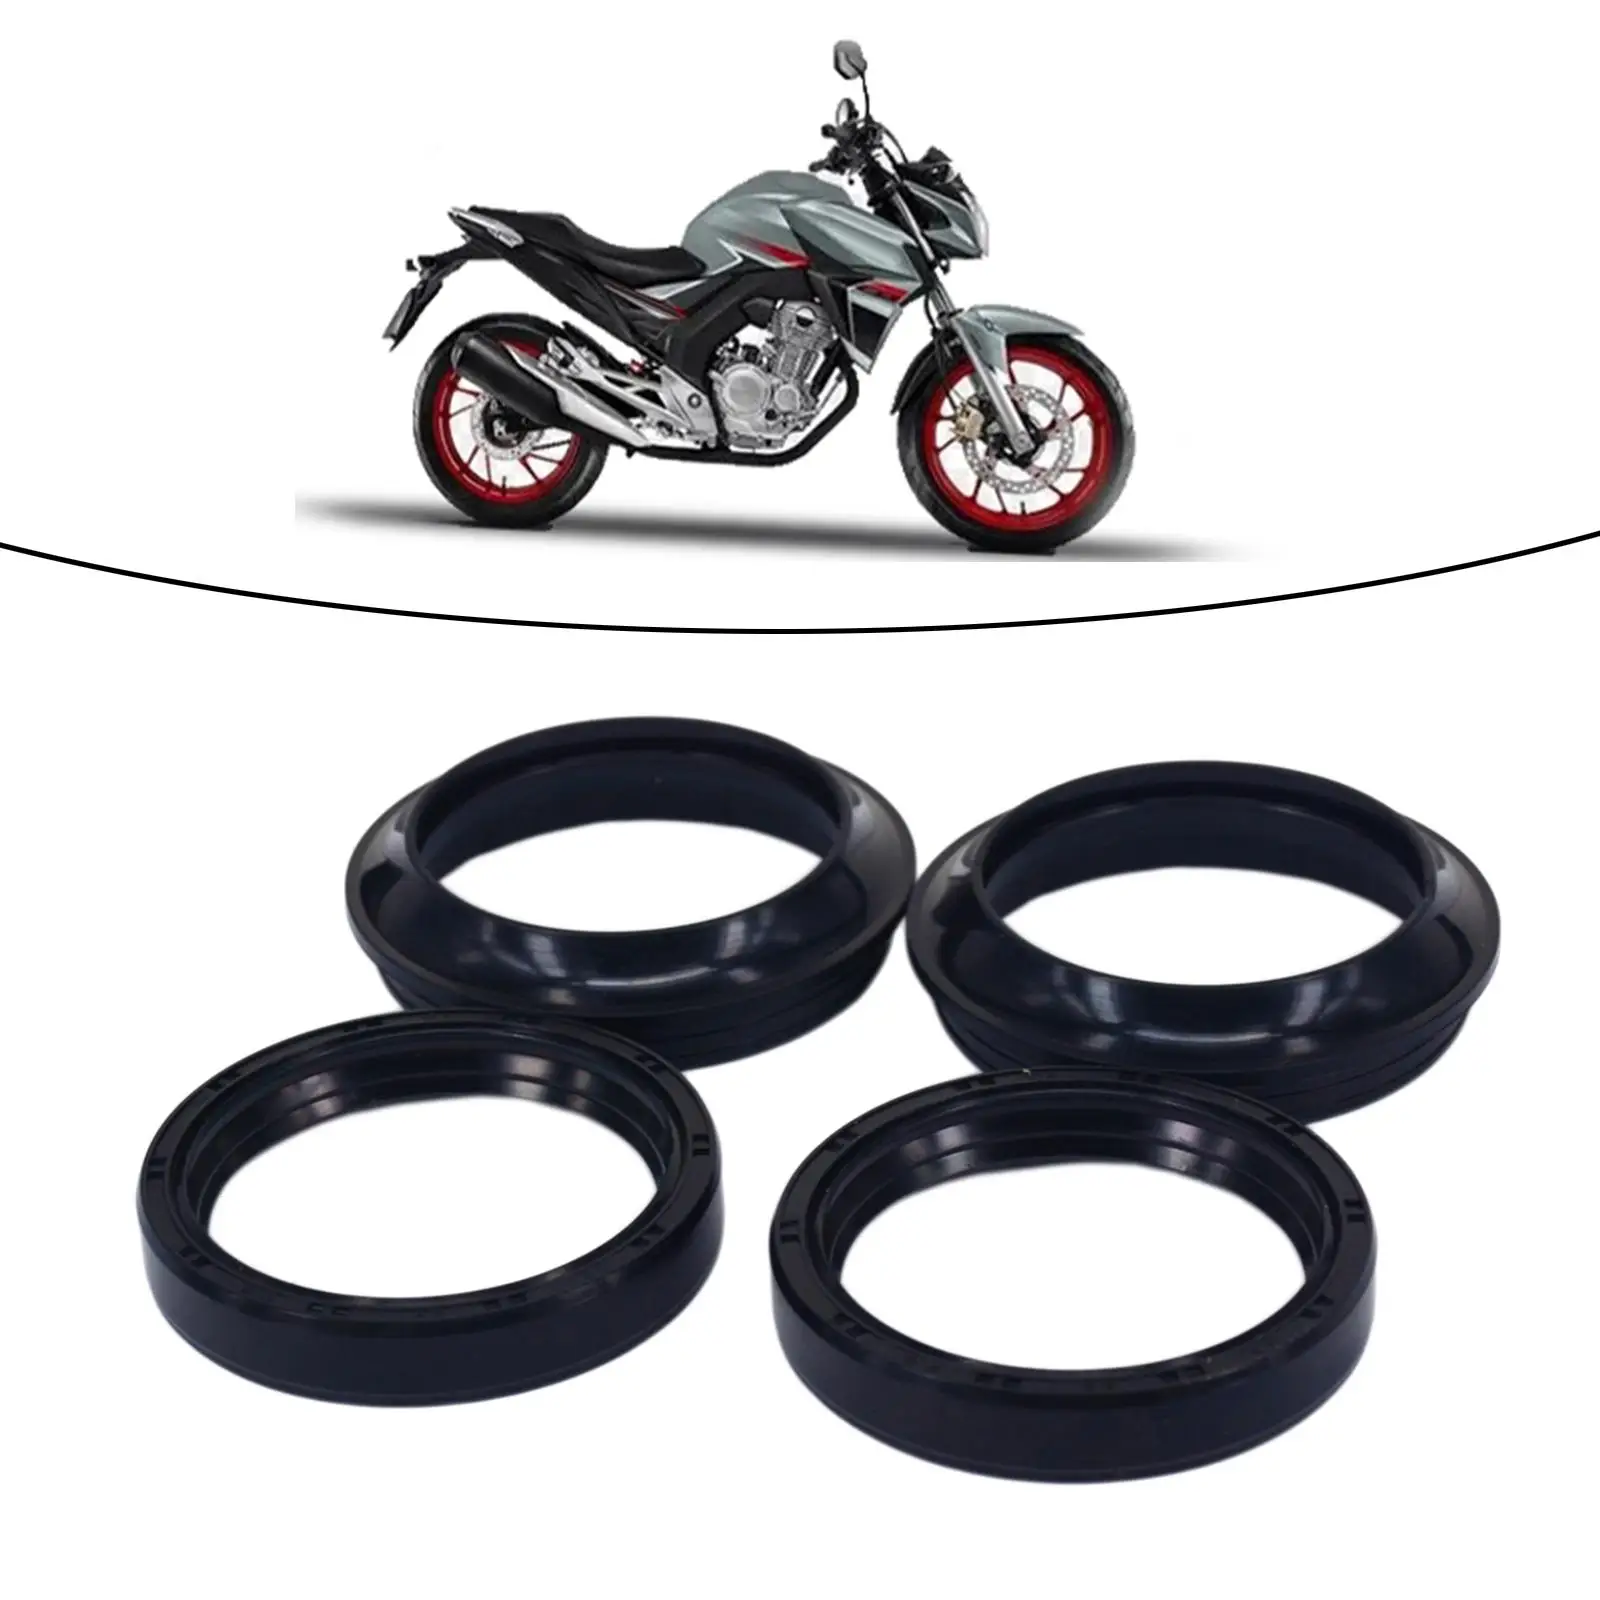 Motorcycle Oil Seals Dust Seals Kit for Honda CBR250RA Crf230M Crf230F